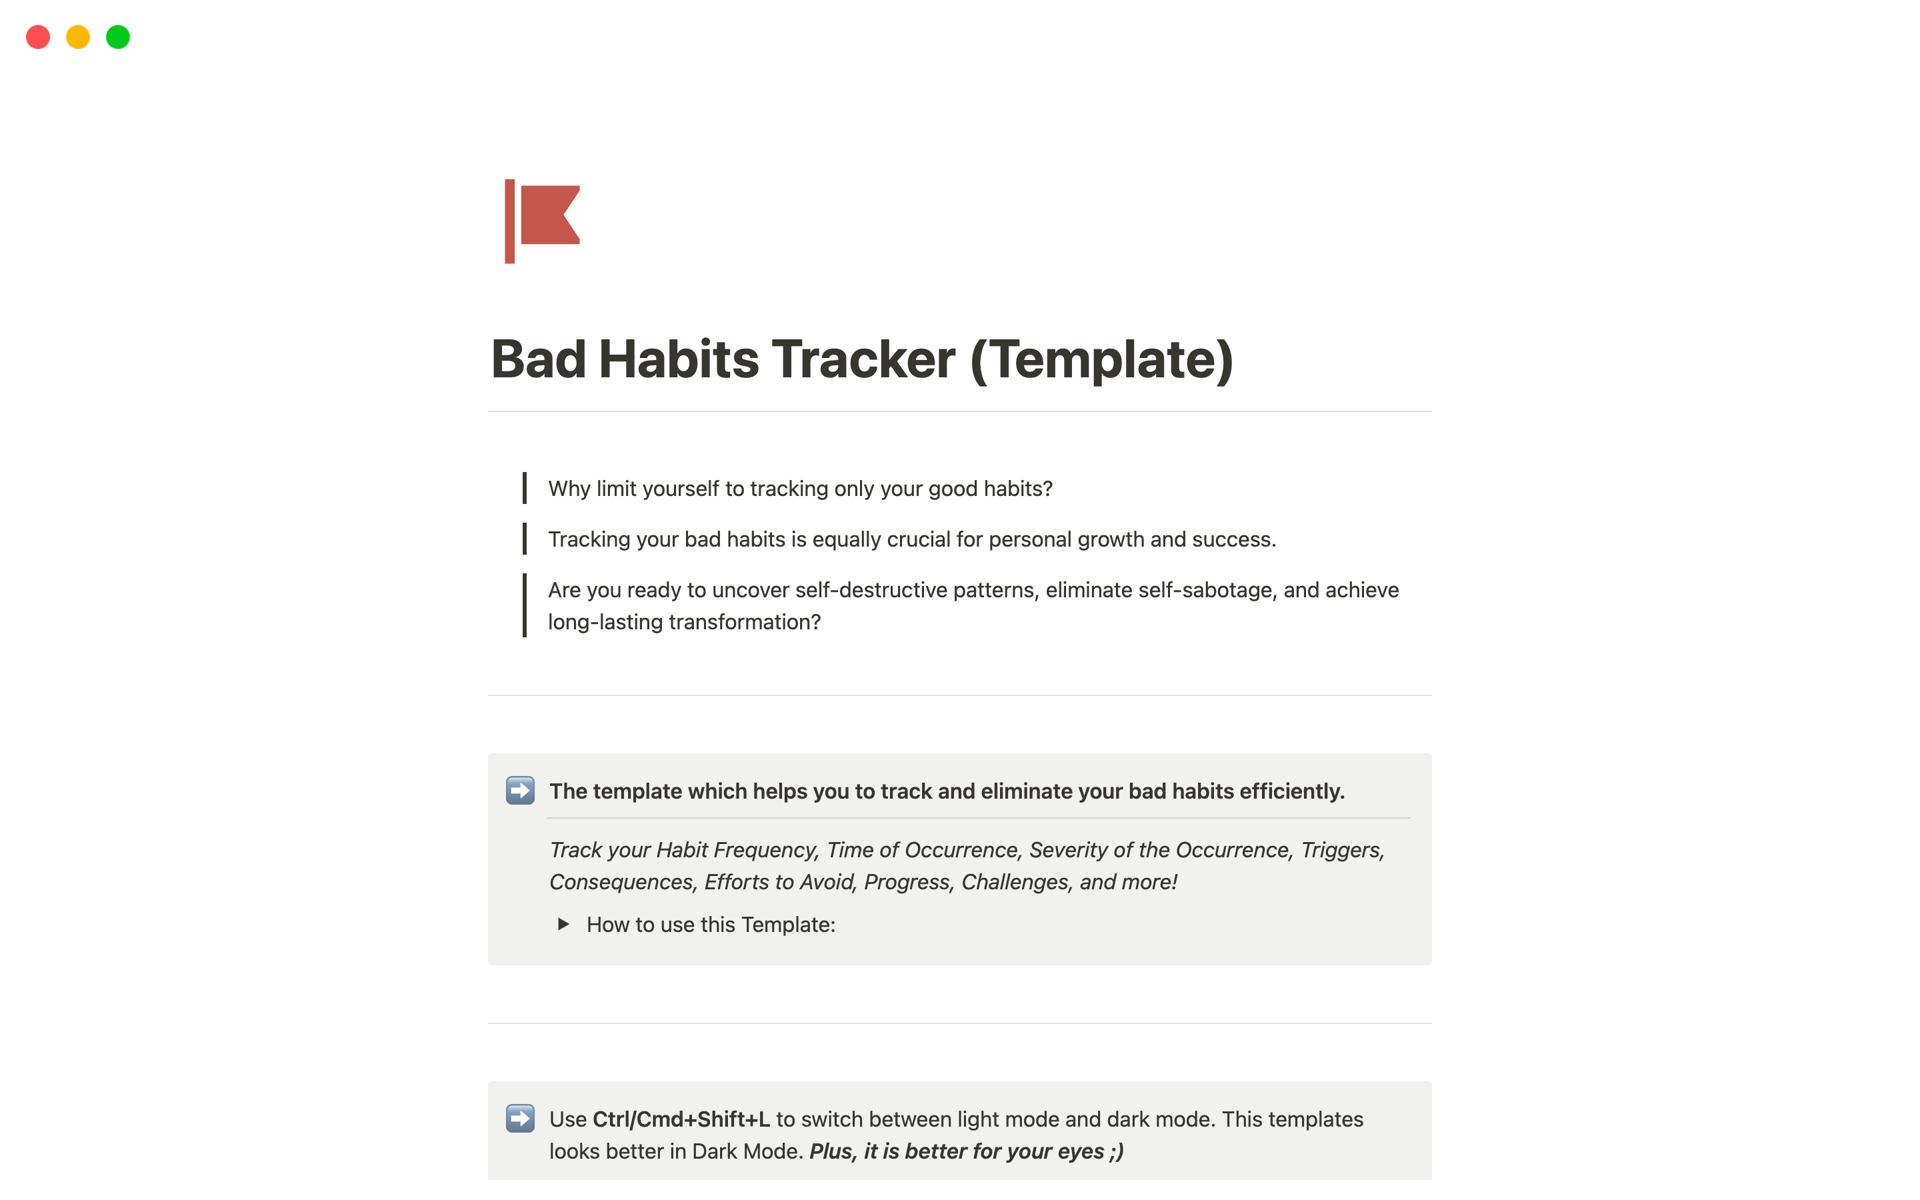 Vista previa de una plantilla para Bad Habits Tracker